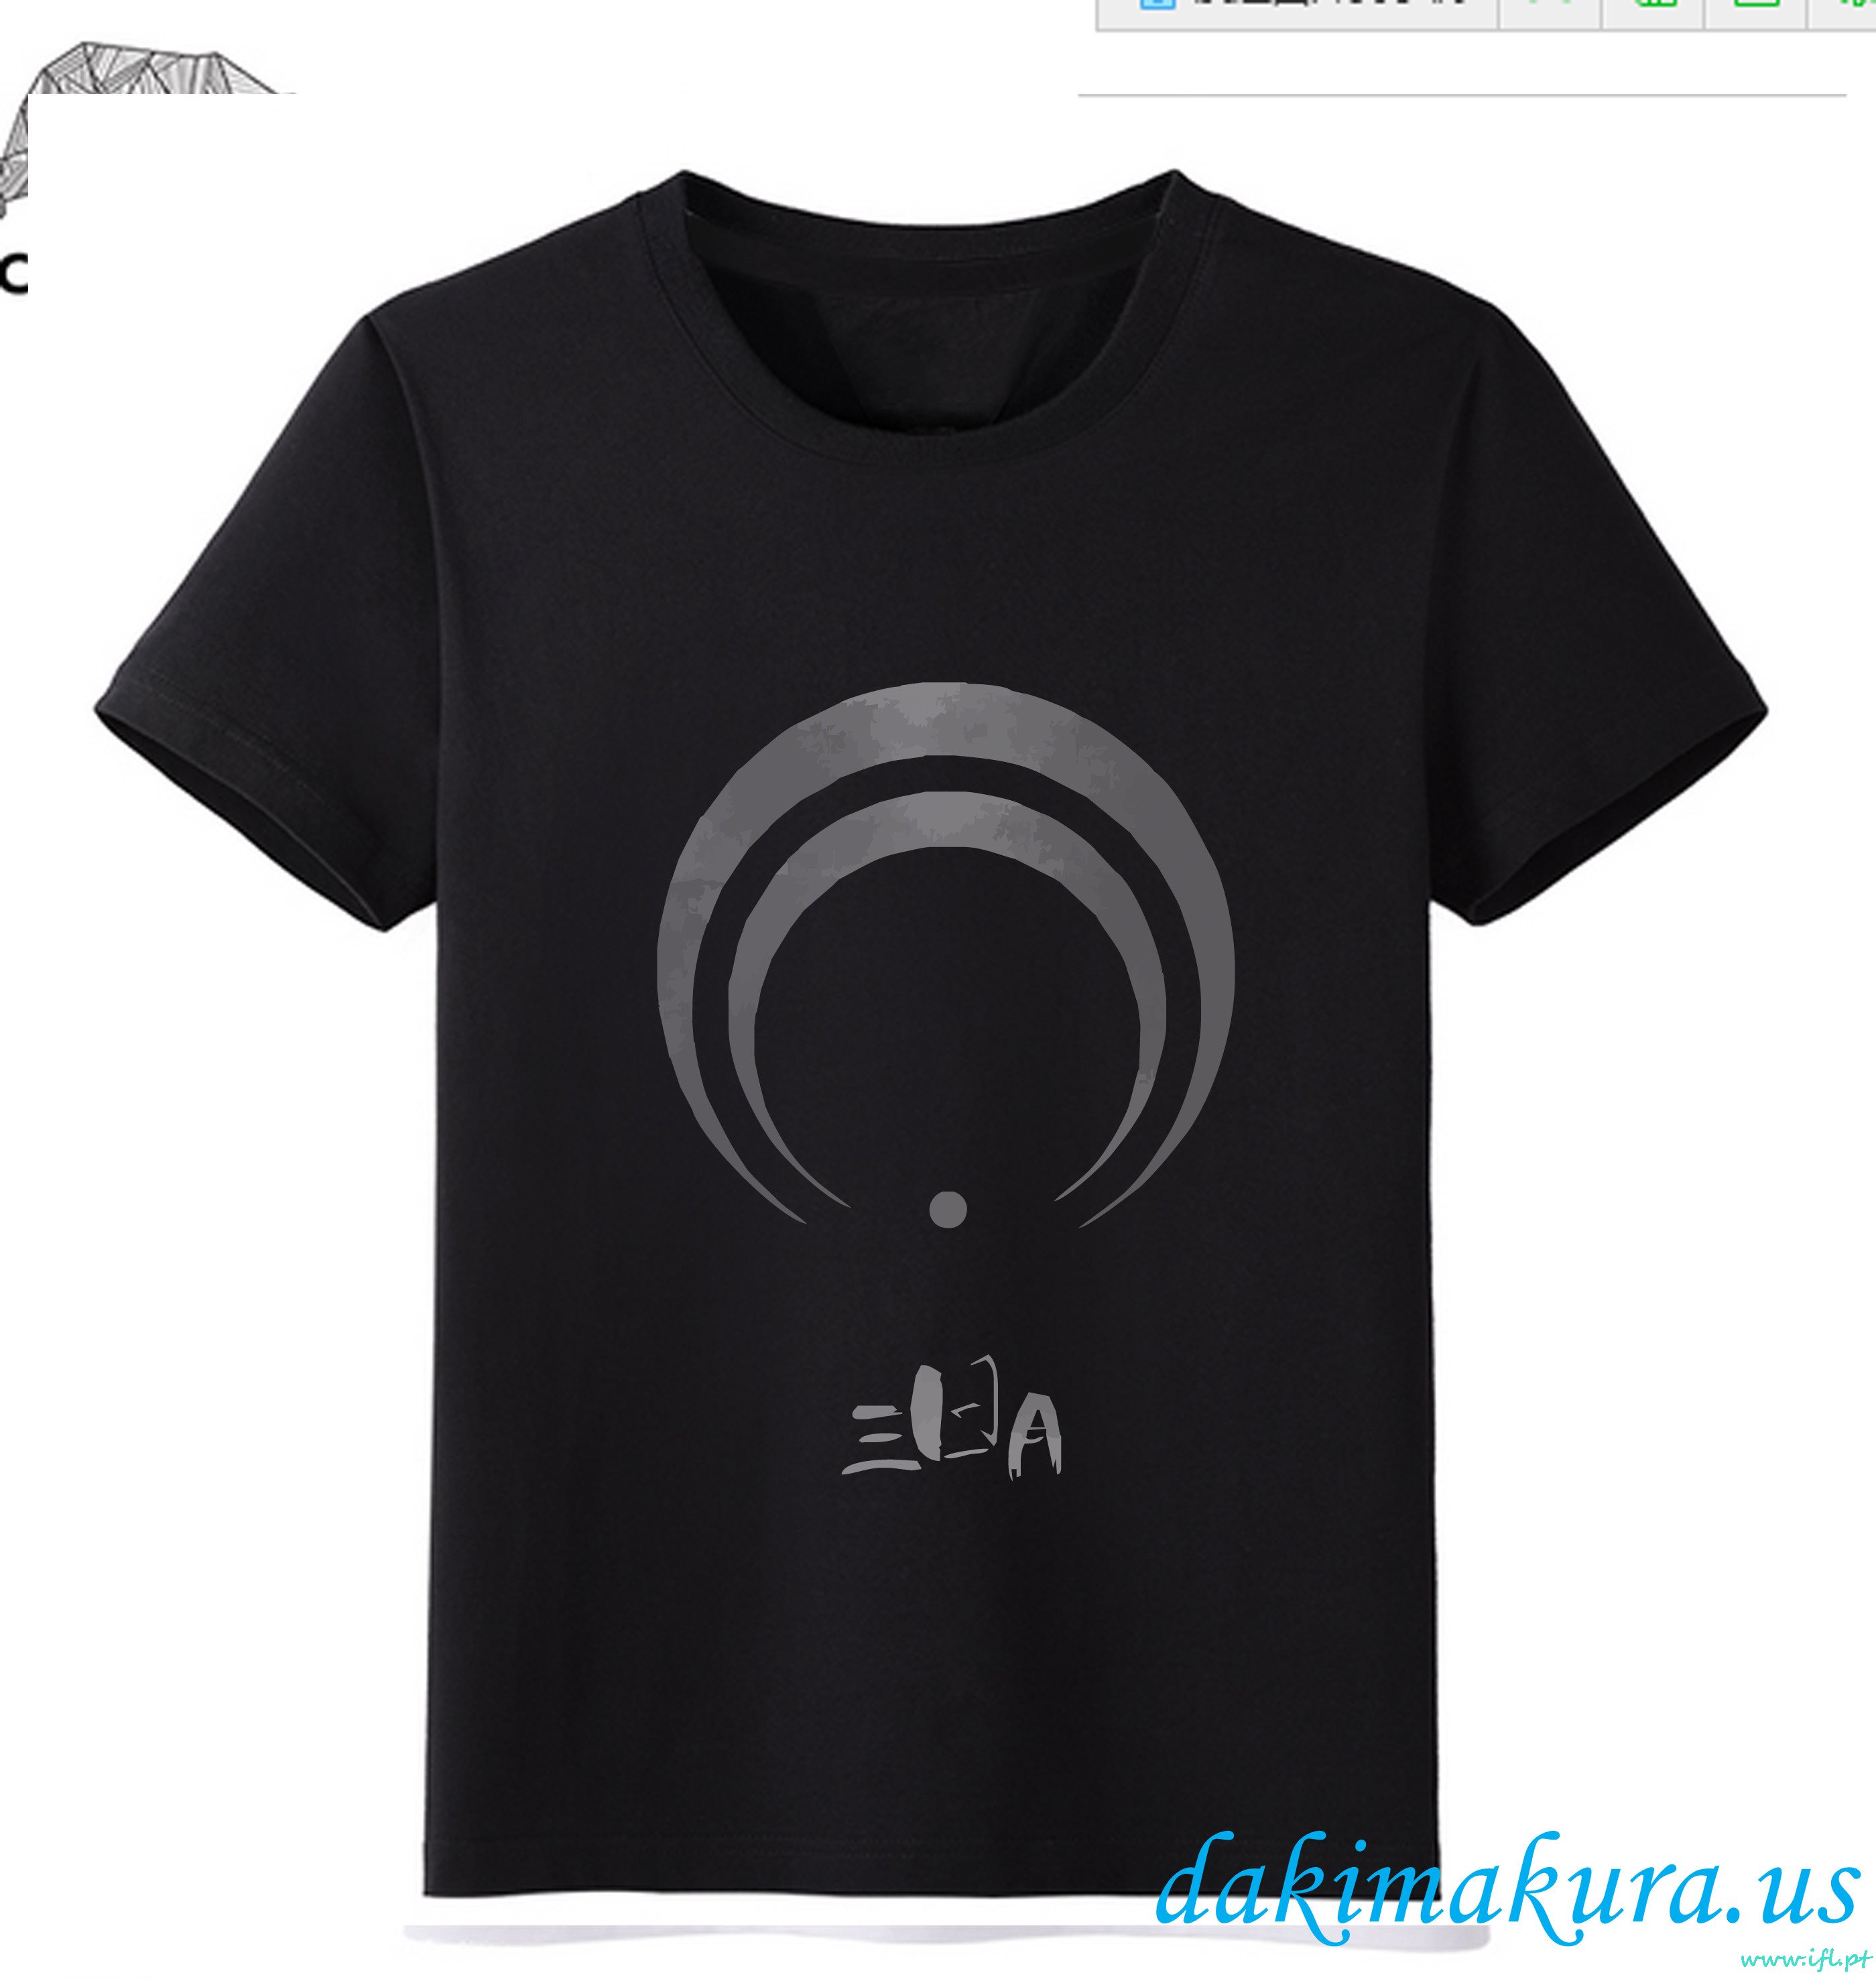 Billiga Svart-touken Ranbu Online Män Anime Mode T-shirts Från Kina Fabrik